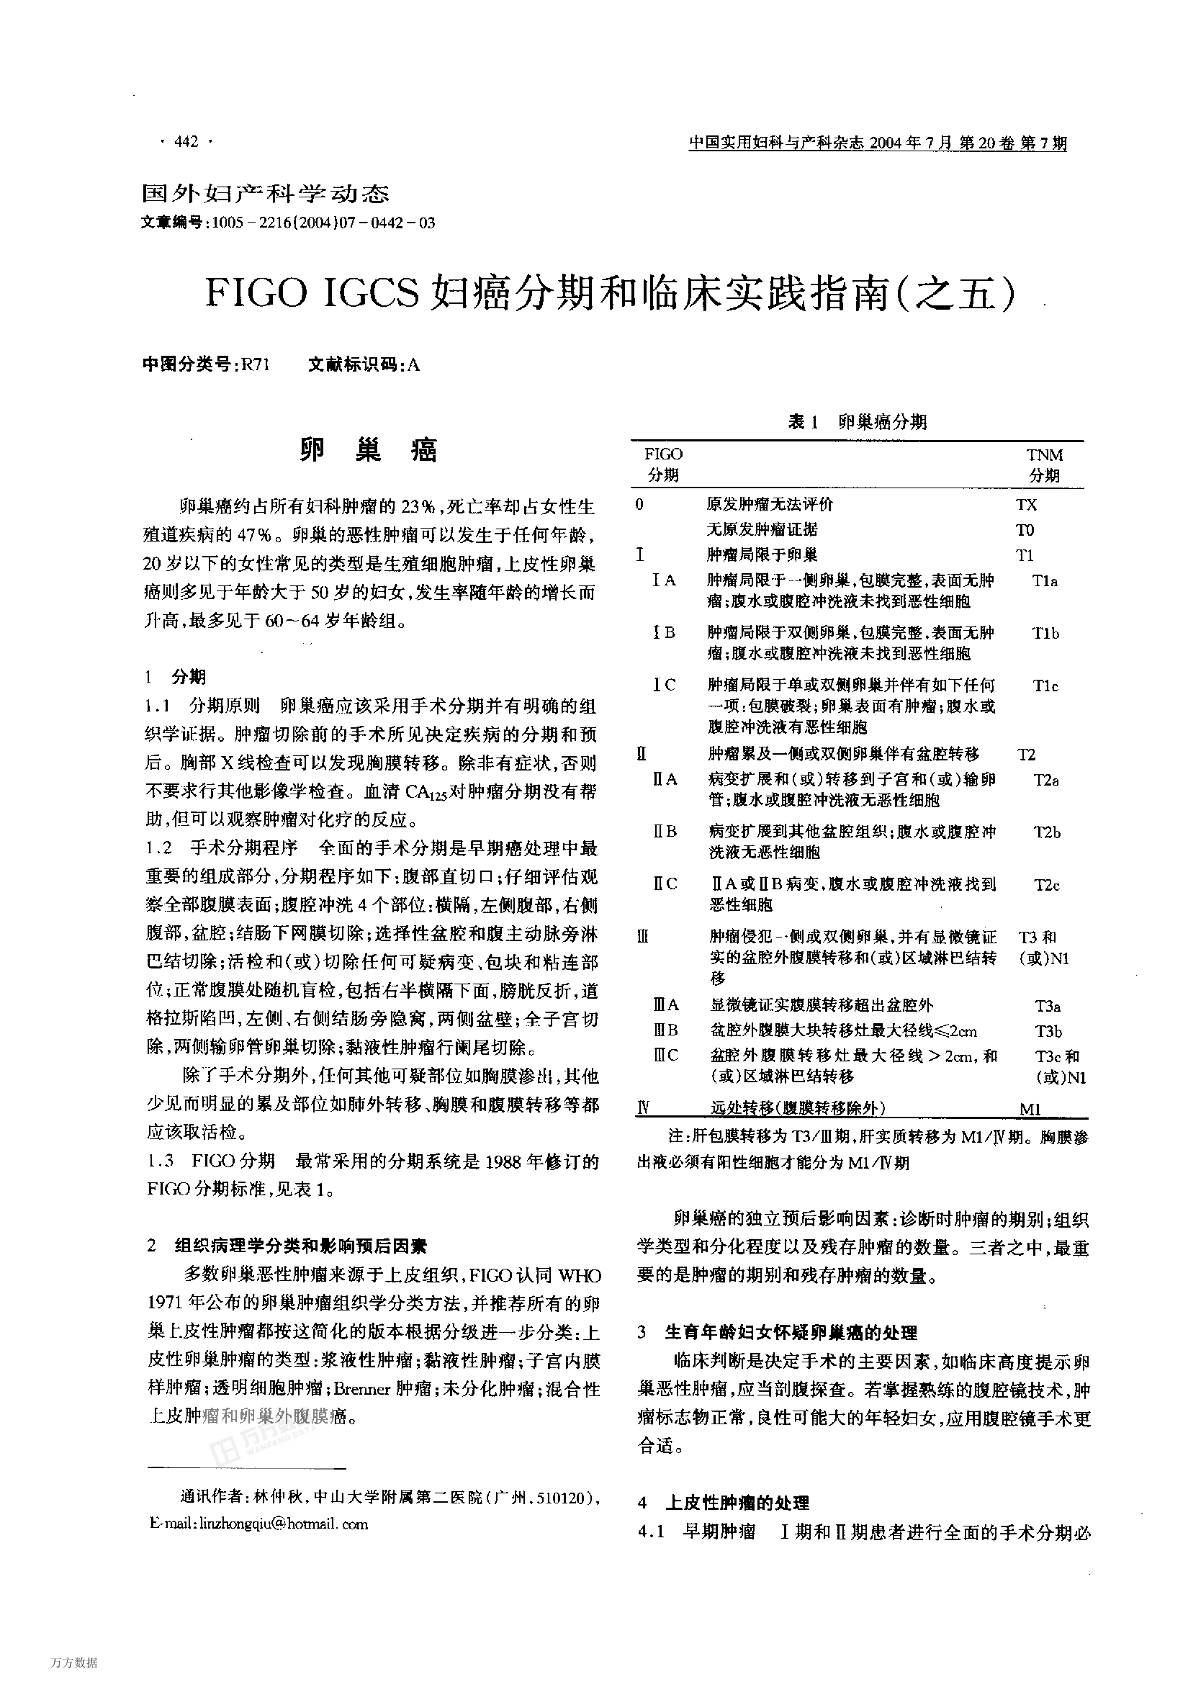 FIGOIGCS妇癌分期和临床实践指南(之五).pdf